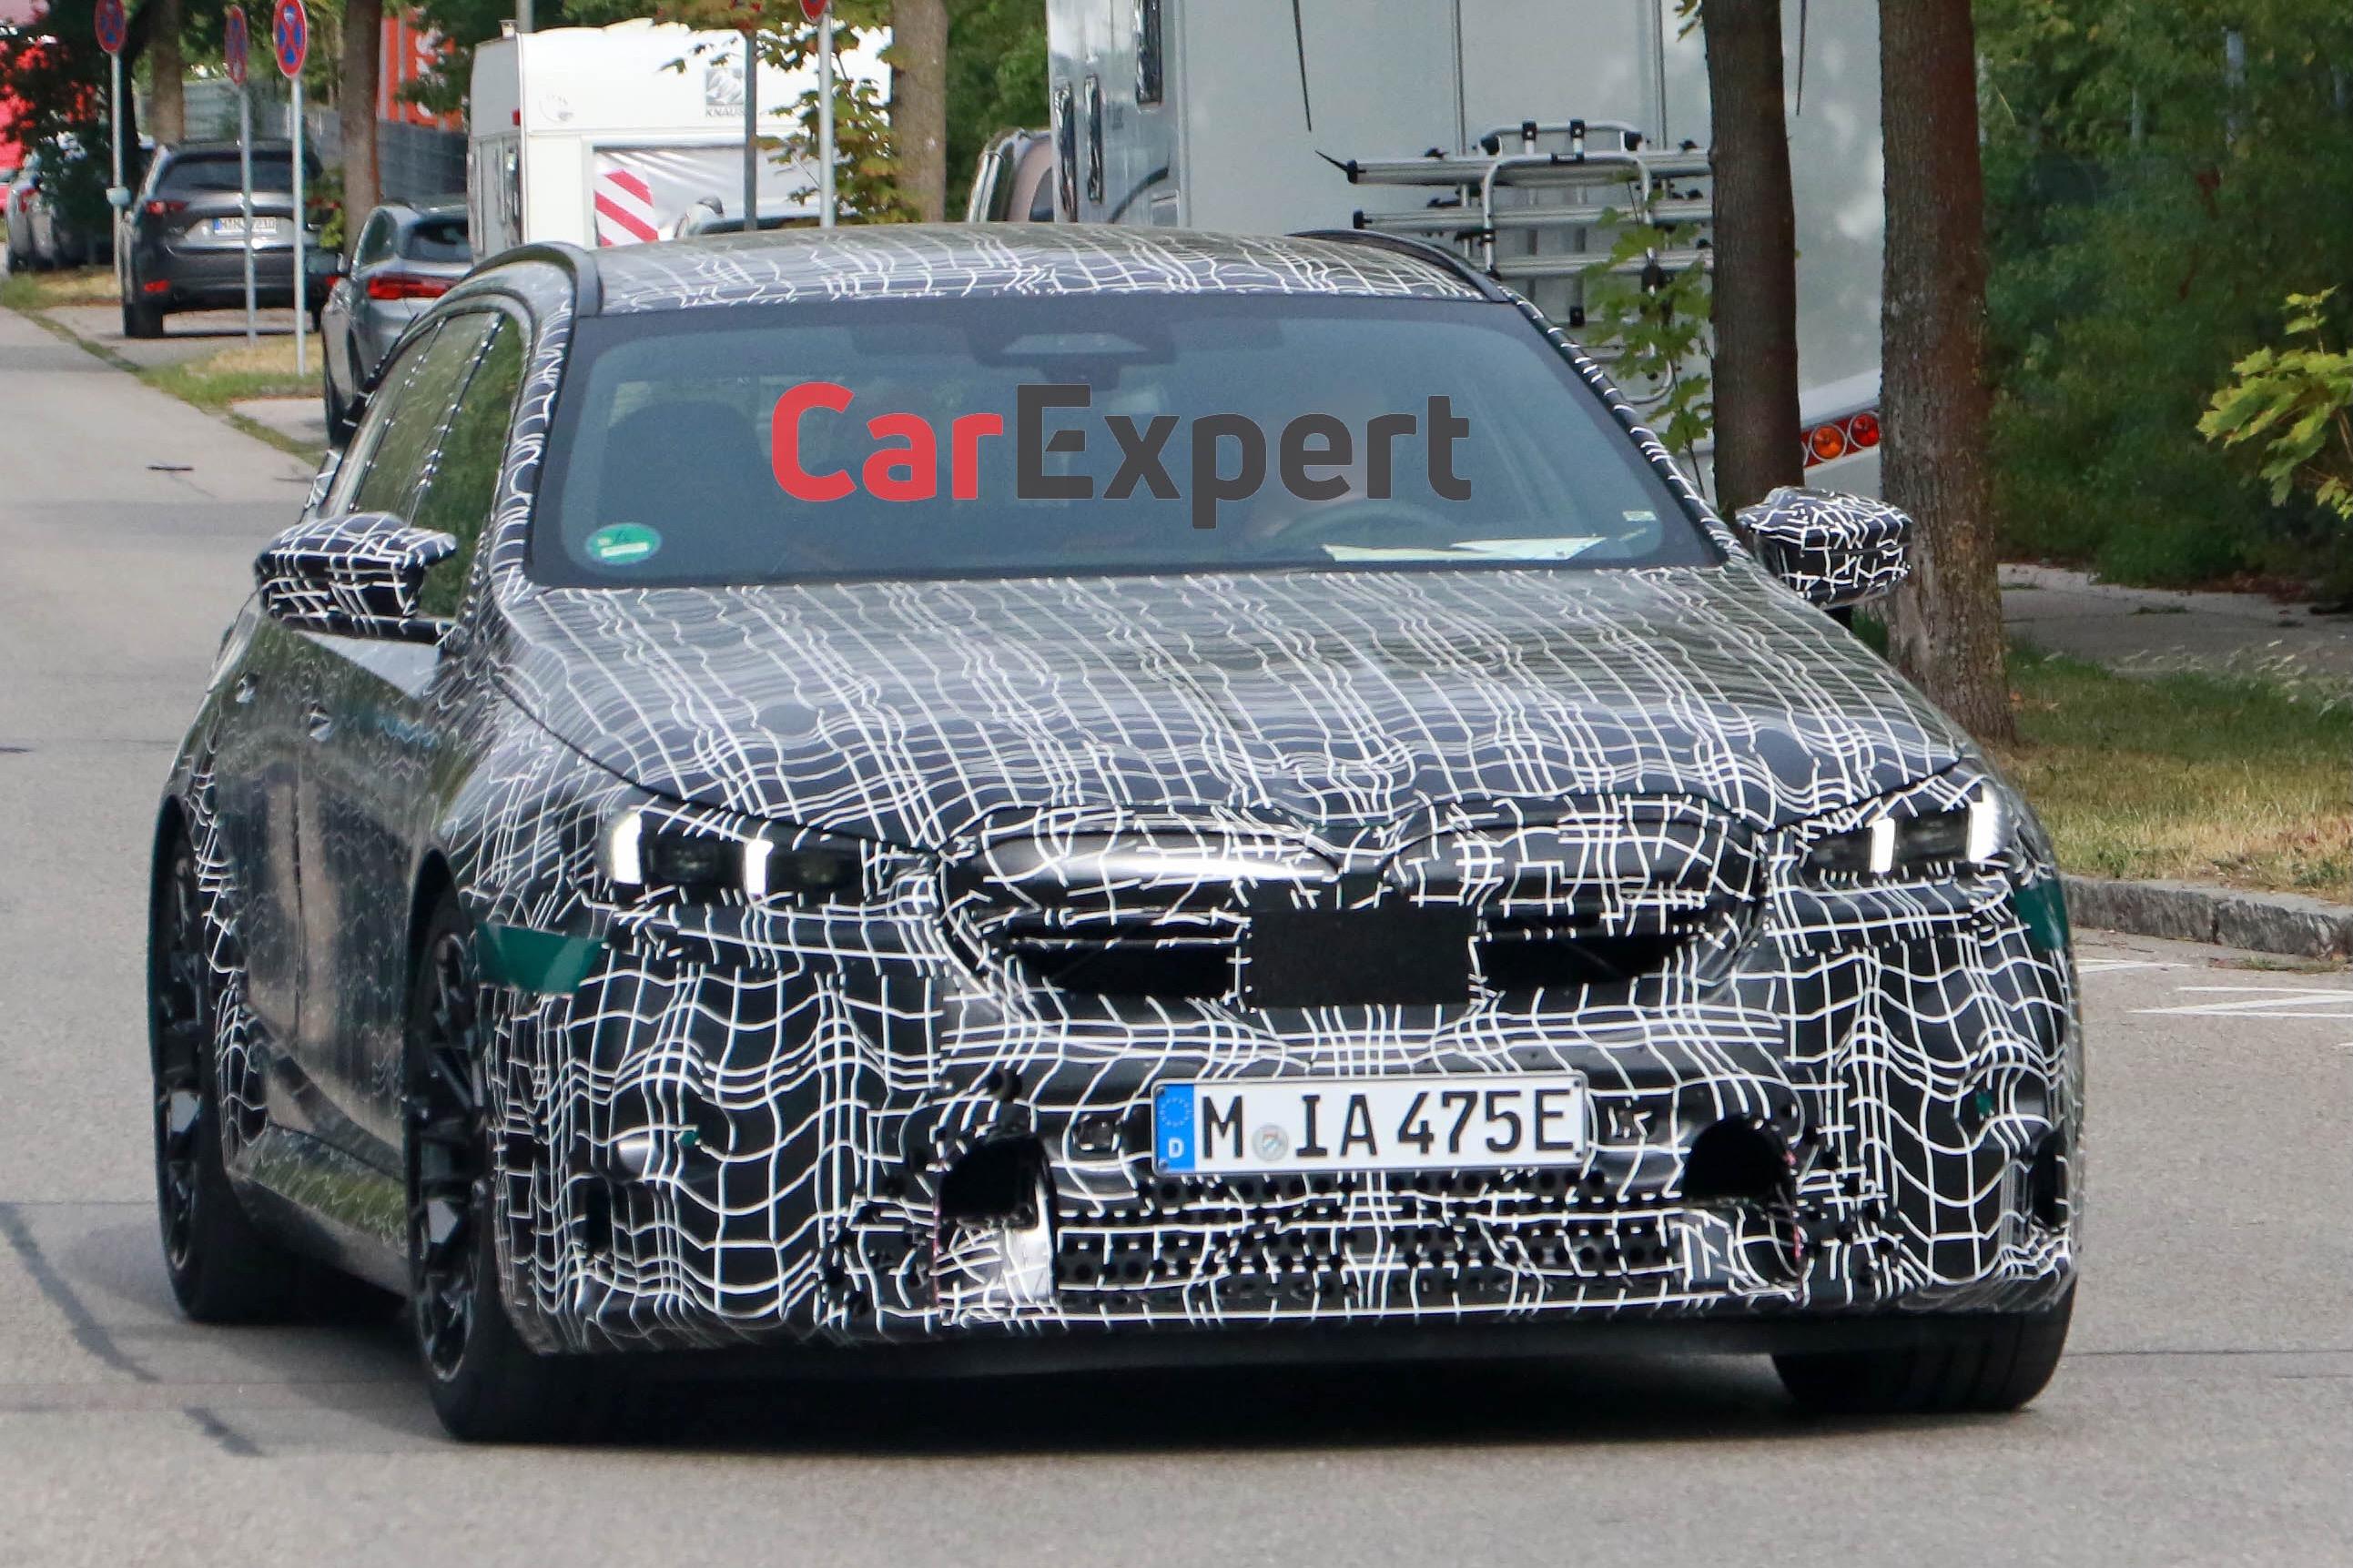 BMW’s high-performance hero wagon spied